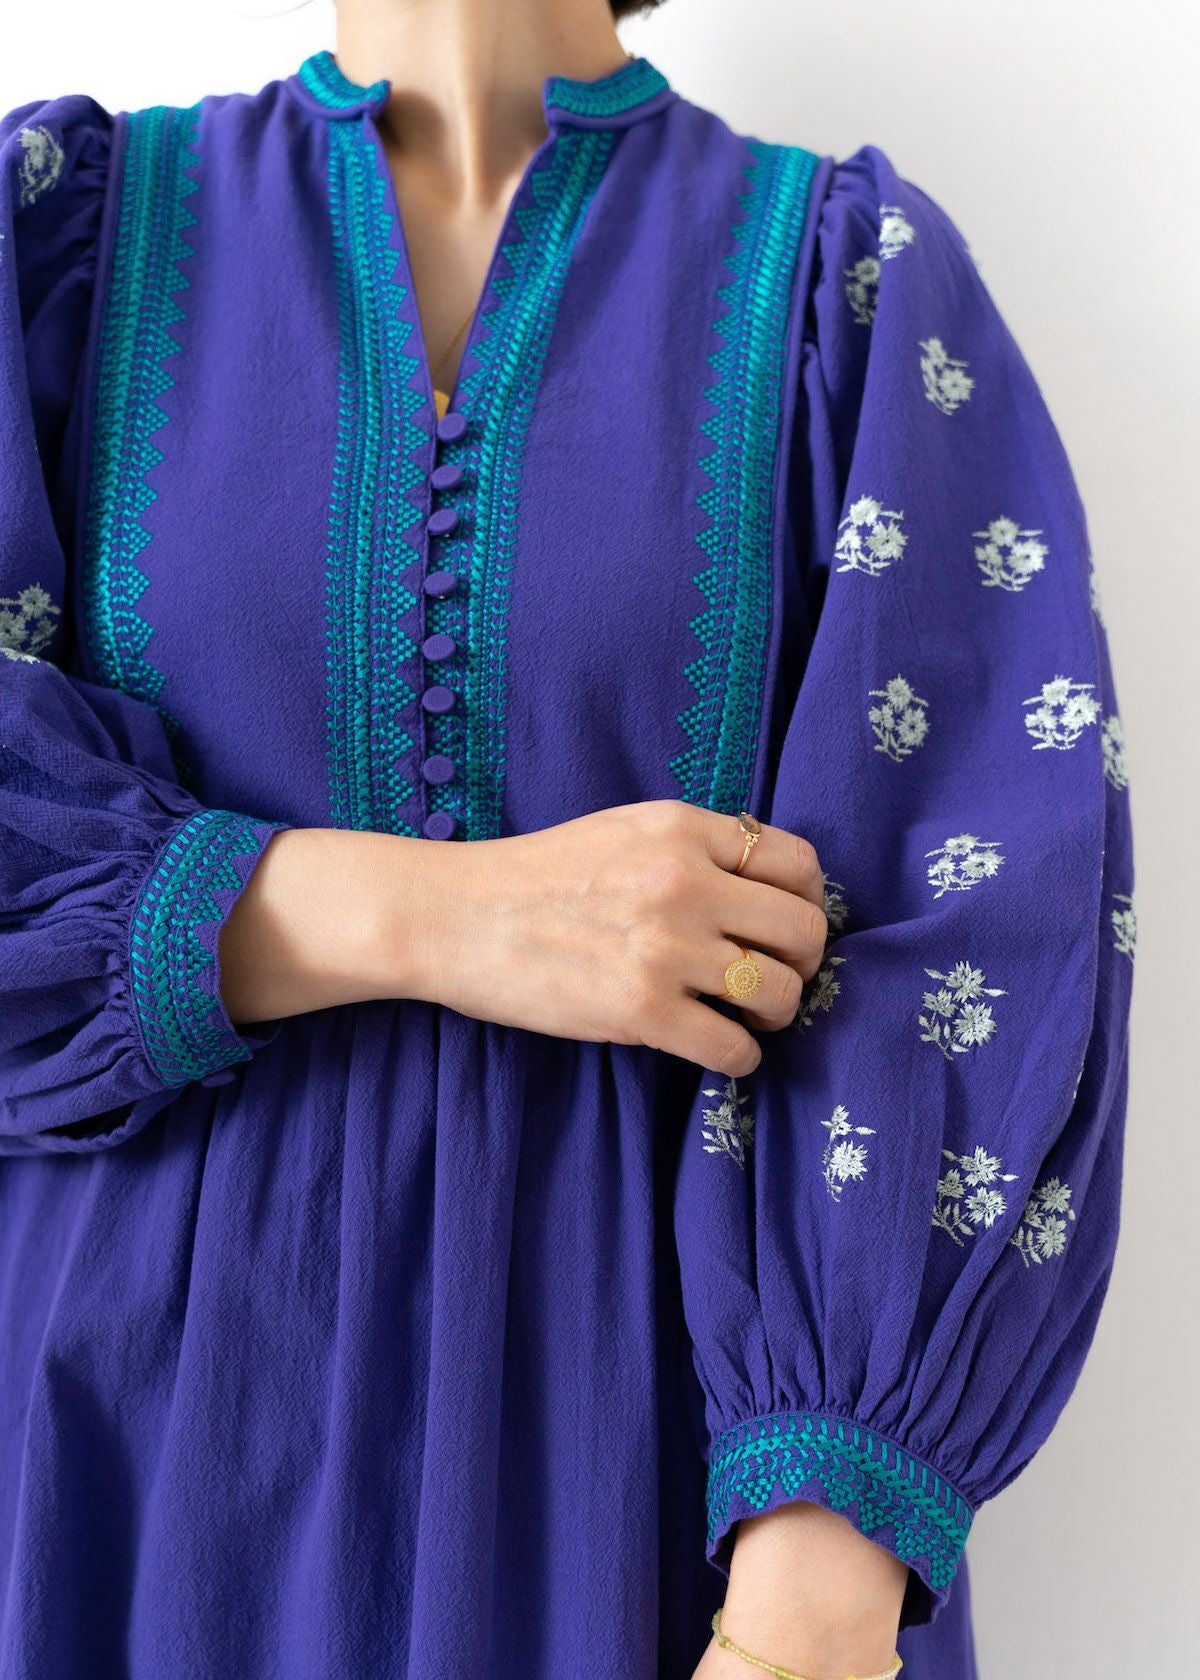 Crimp Cotton Embroidery Dress | Pasand by ne Quittez pas | パサン